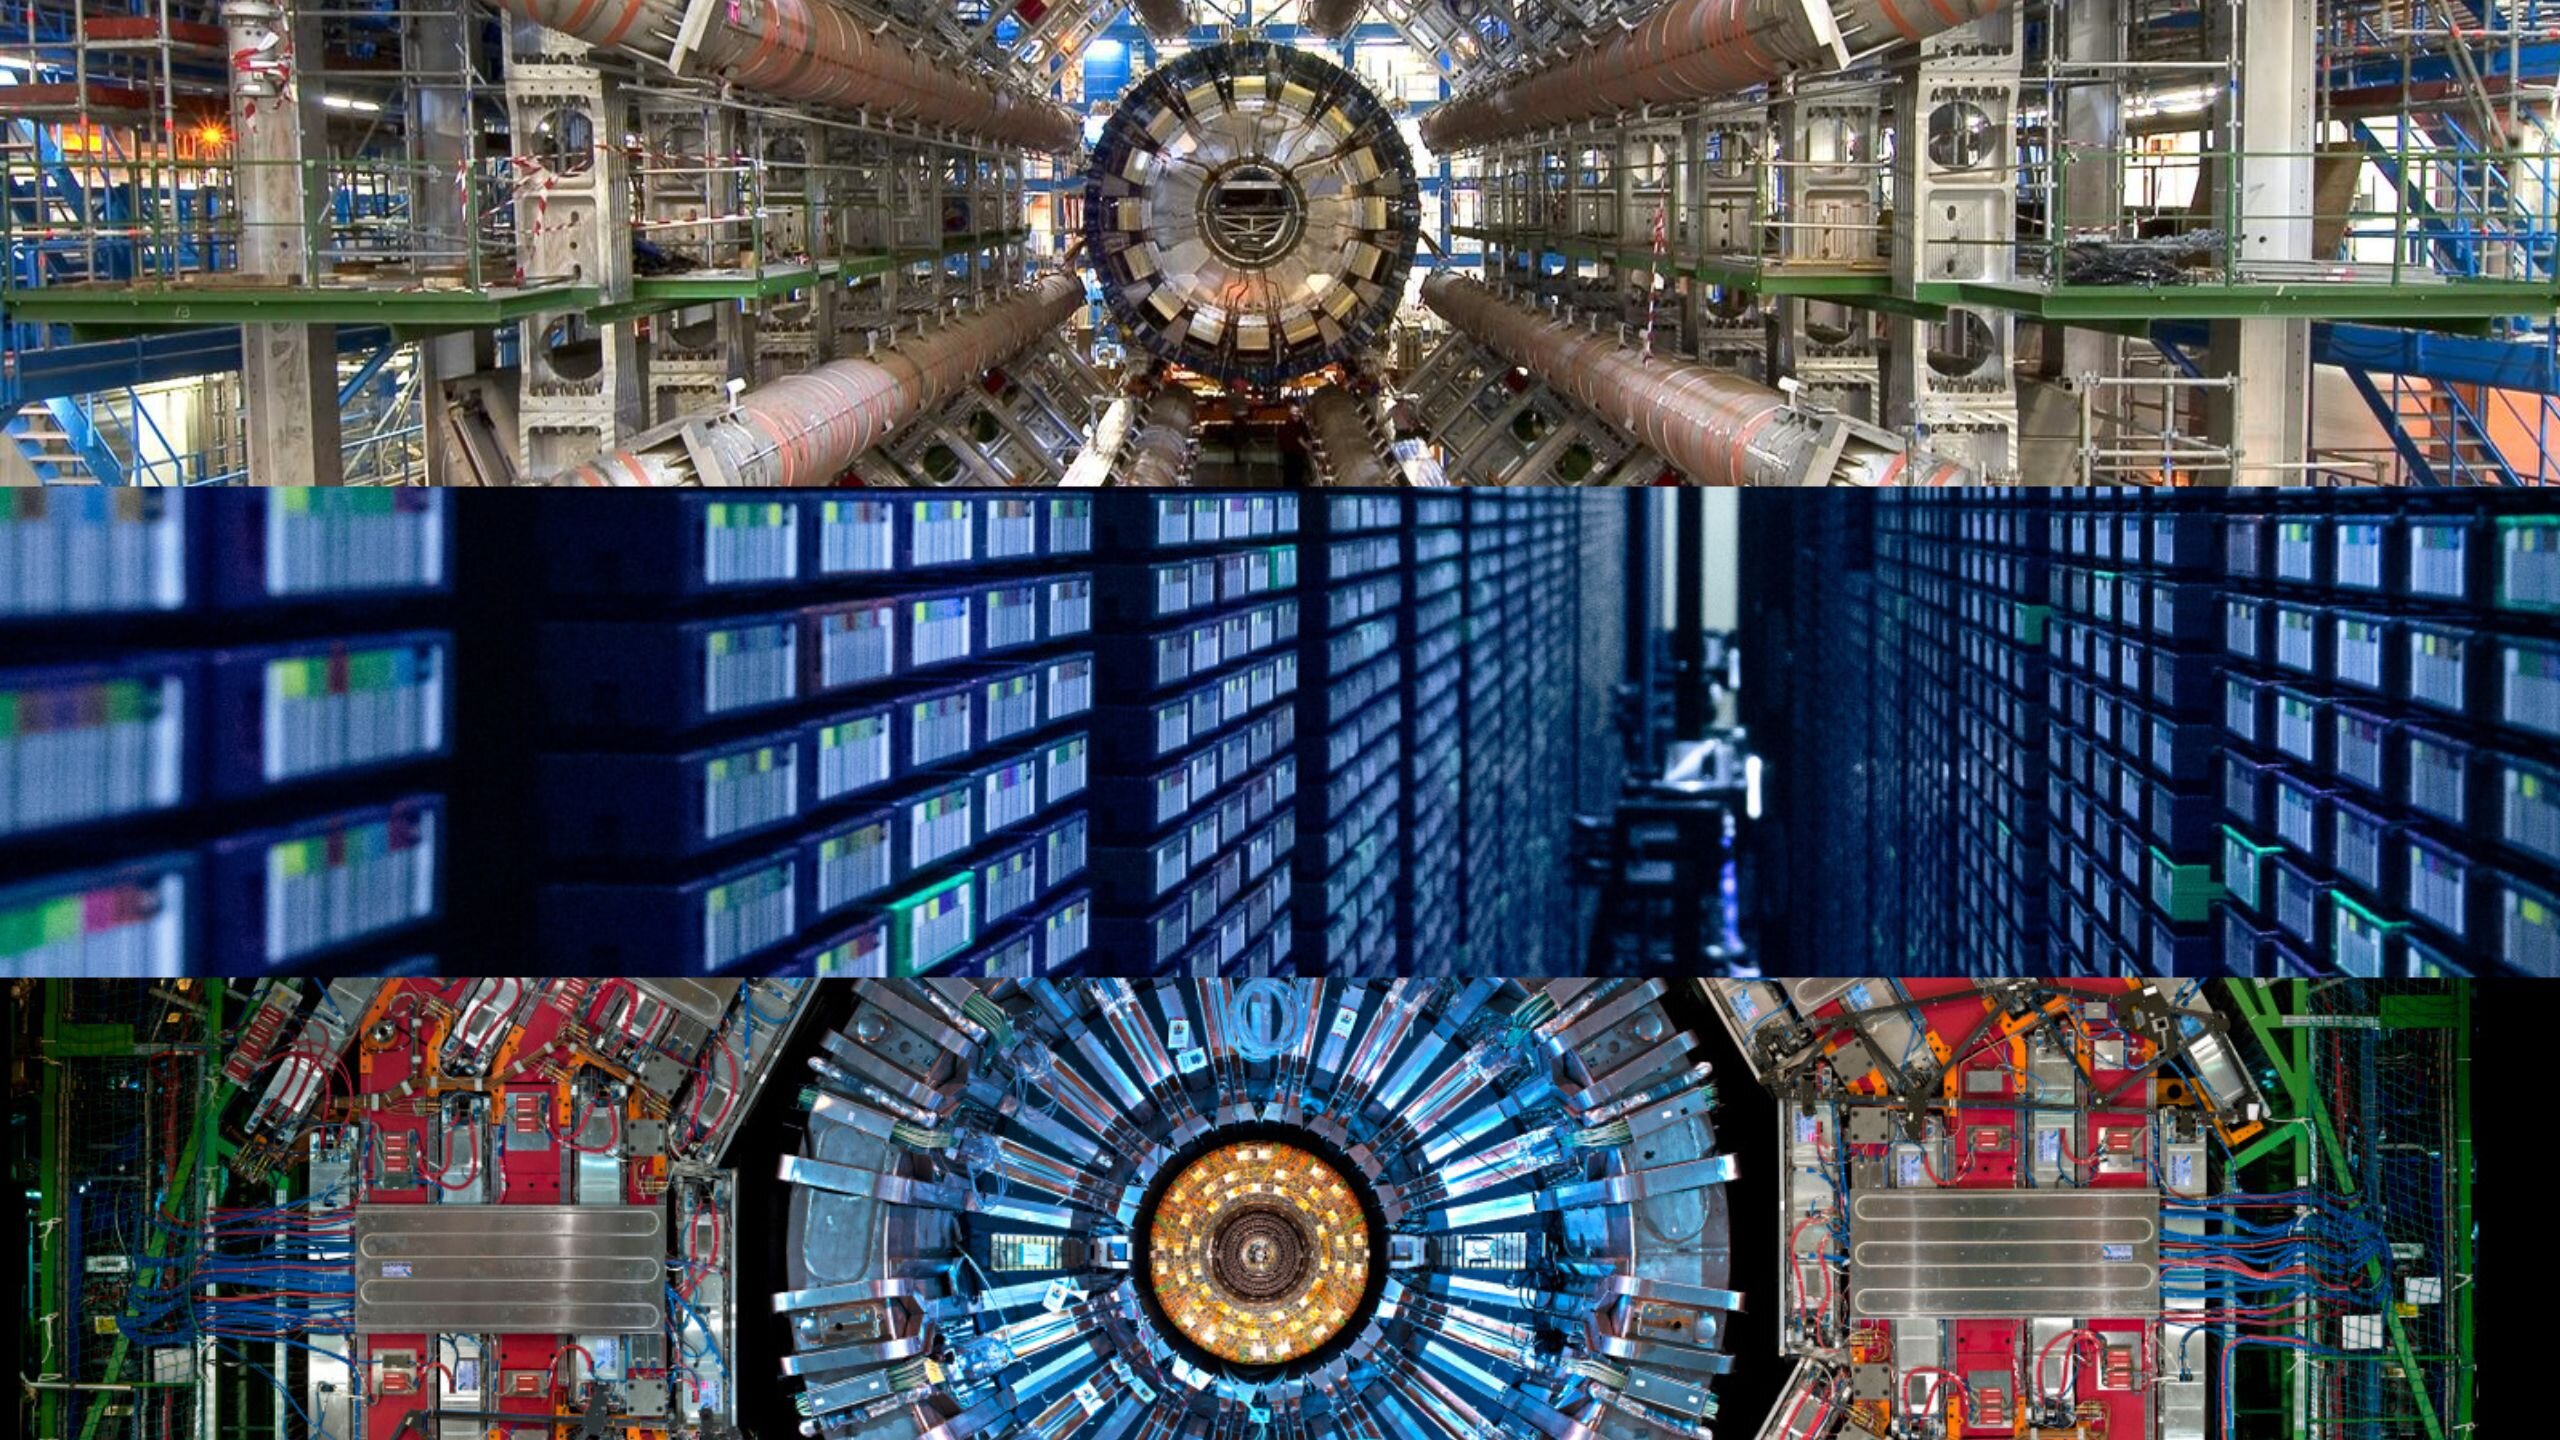 The next-generation triggers for CERN detectors